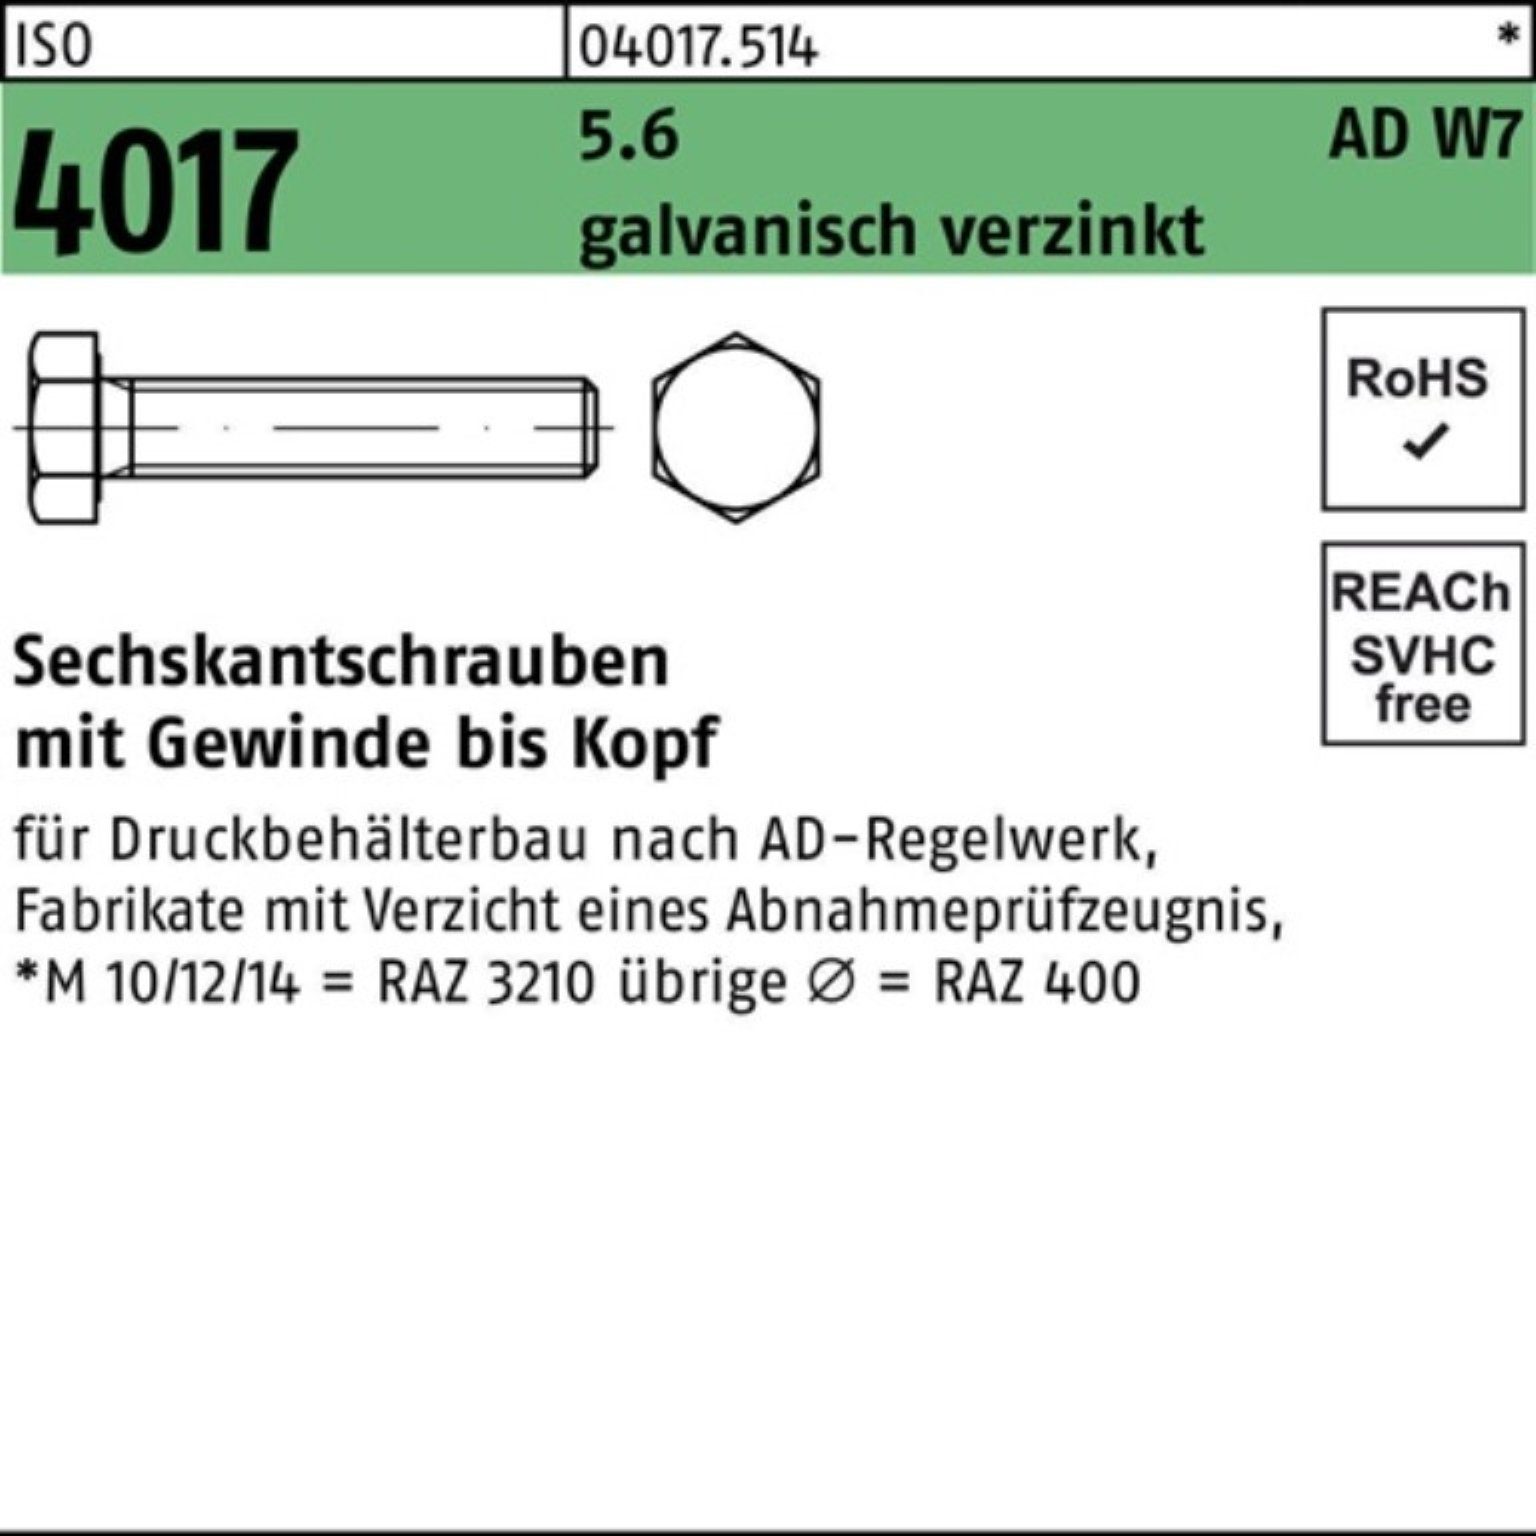 VG M27x Bufab ISO galv.verz. Sechskantschraube Pack W7 AD 120 5.6 Sechskantschraube 100er 4017